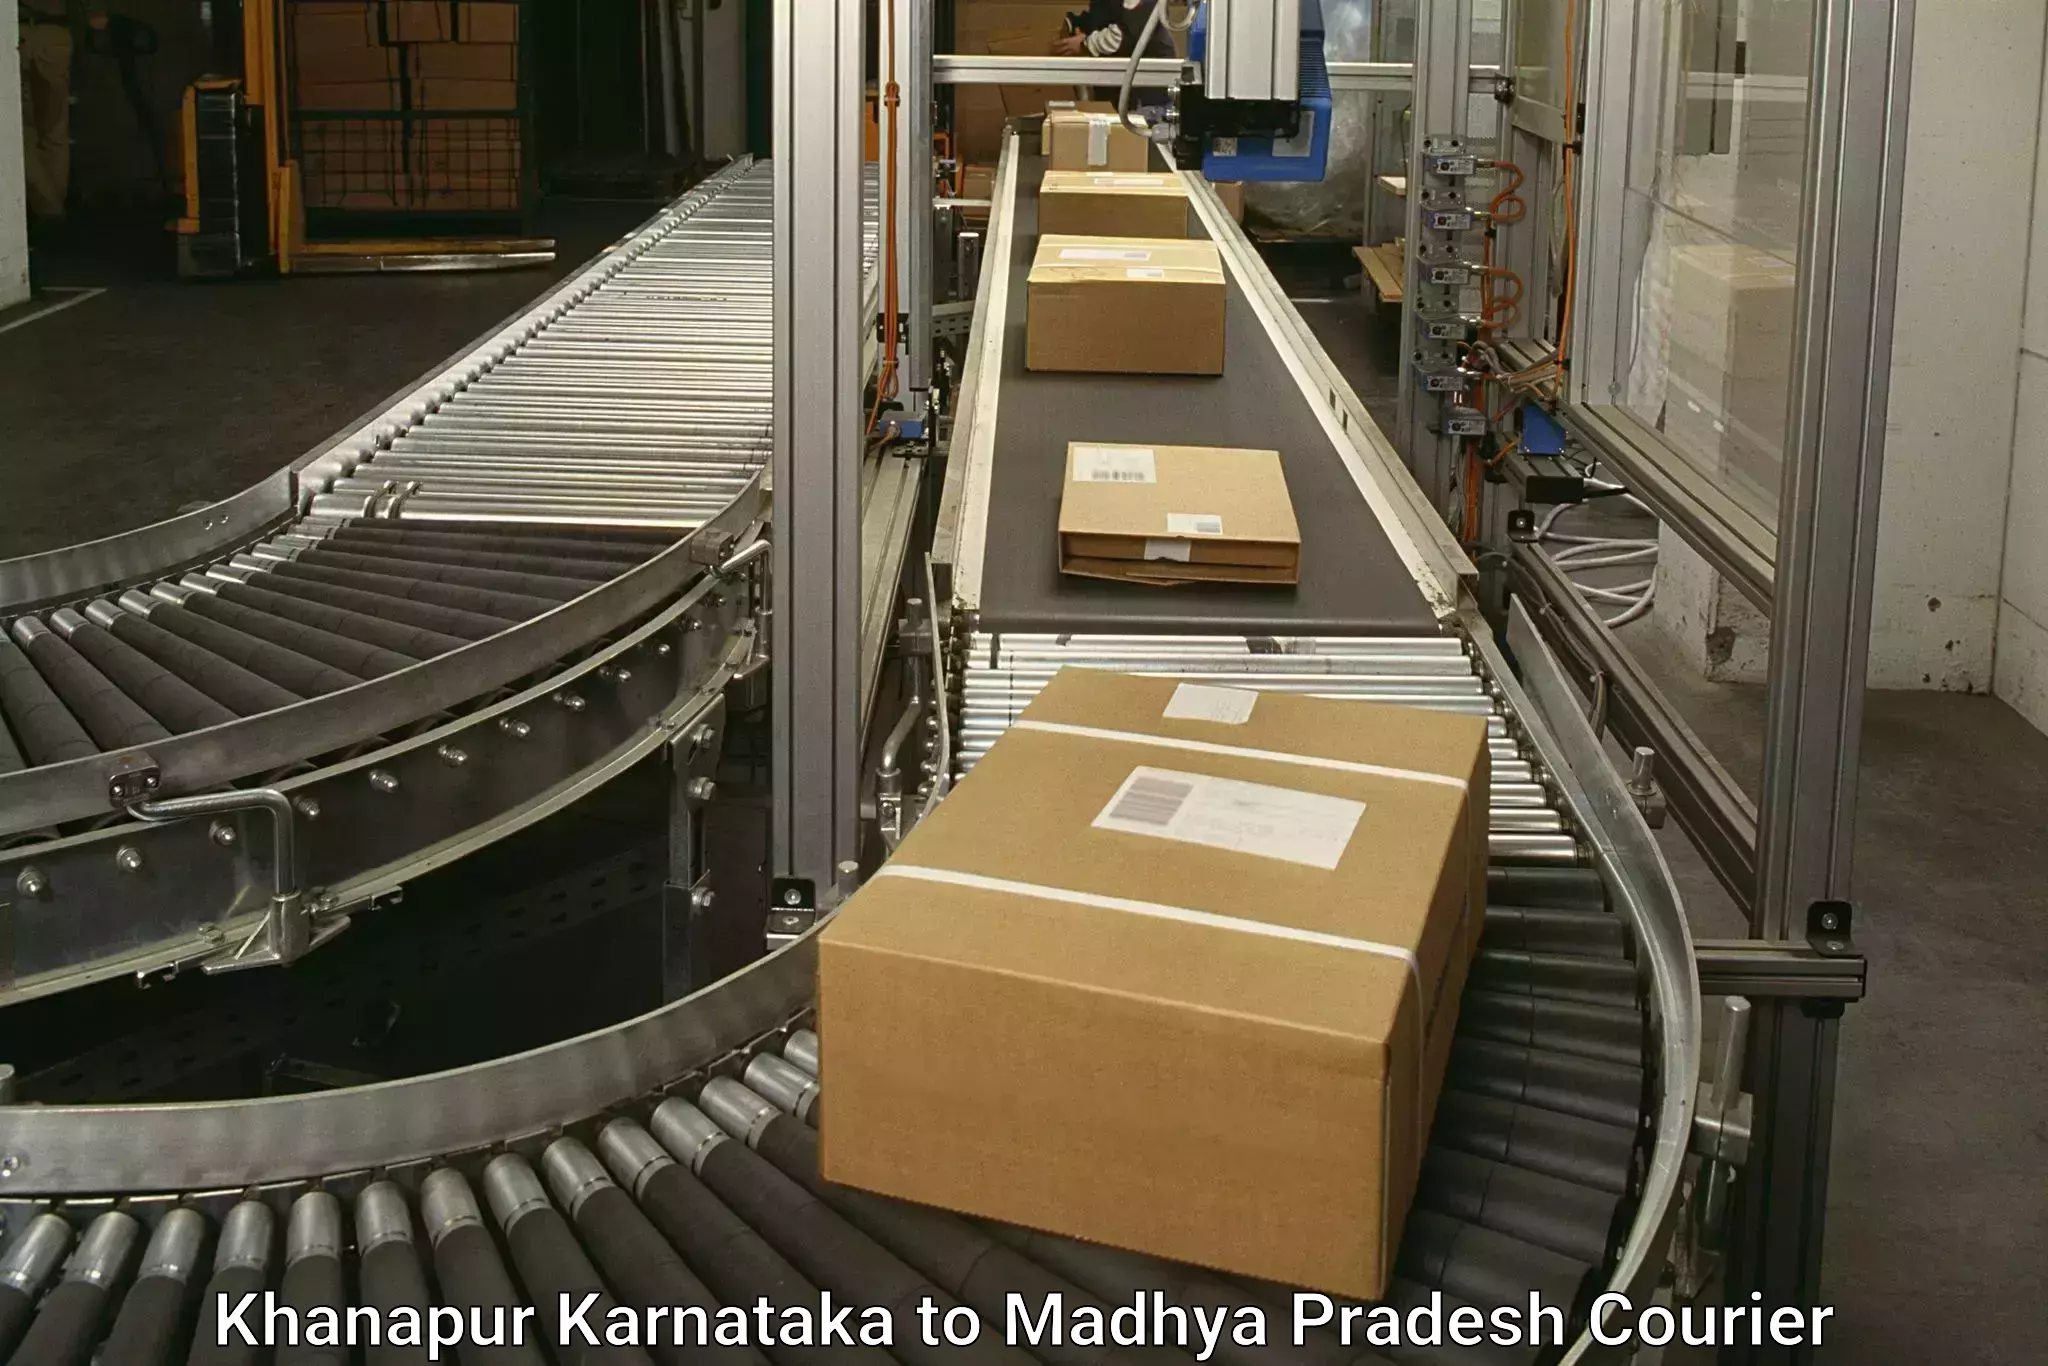 High-speed delivery Khanapur Karnataka to Dola